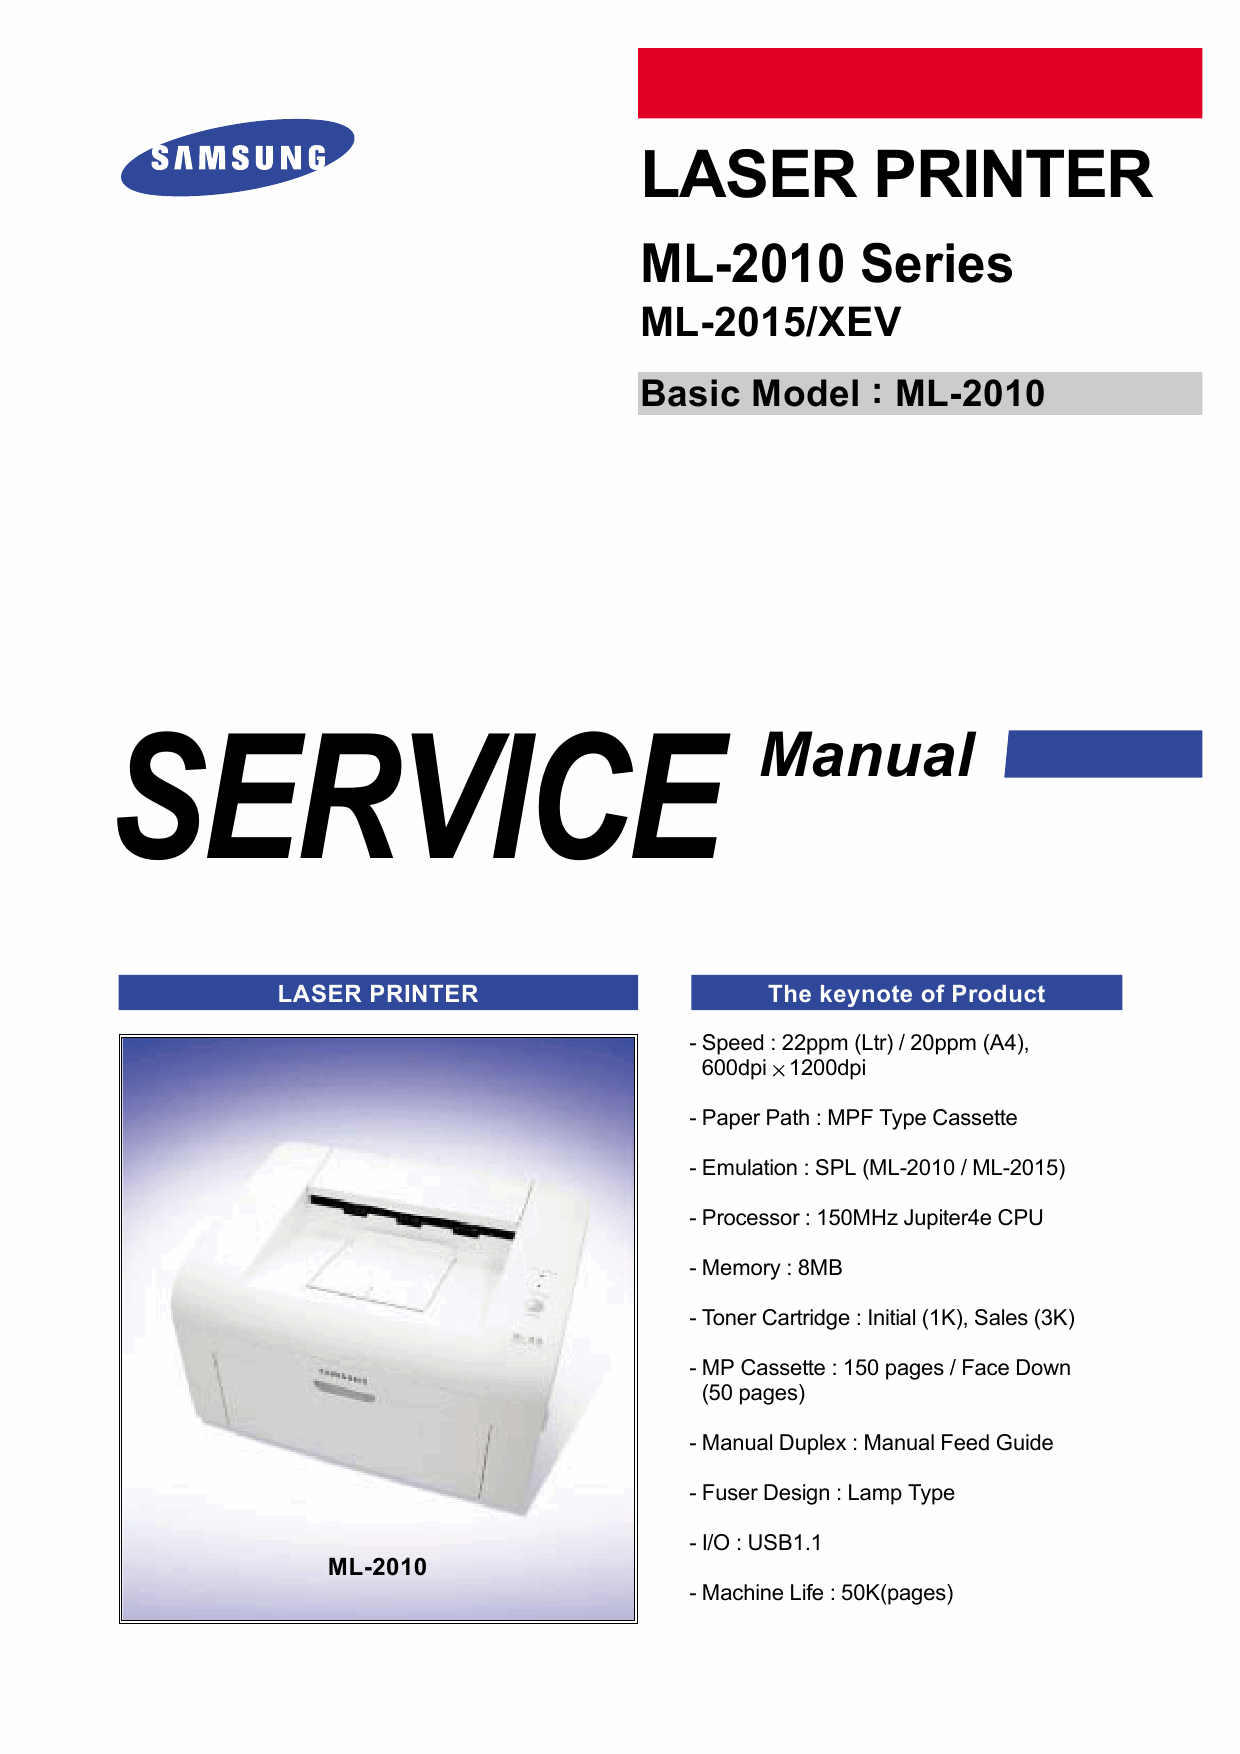 Samsung Laser-Printer ML-2010 2015 Parts and Service Manual-1